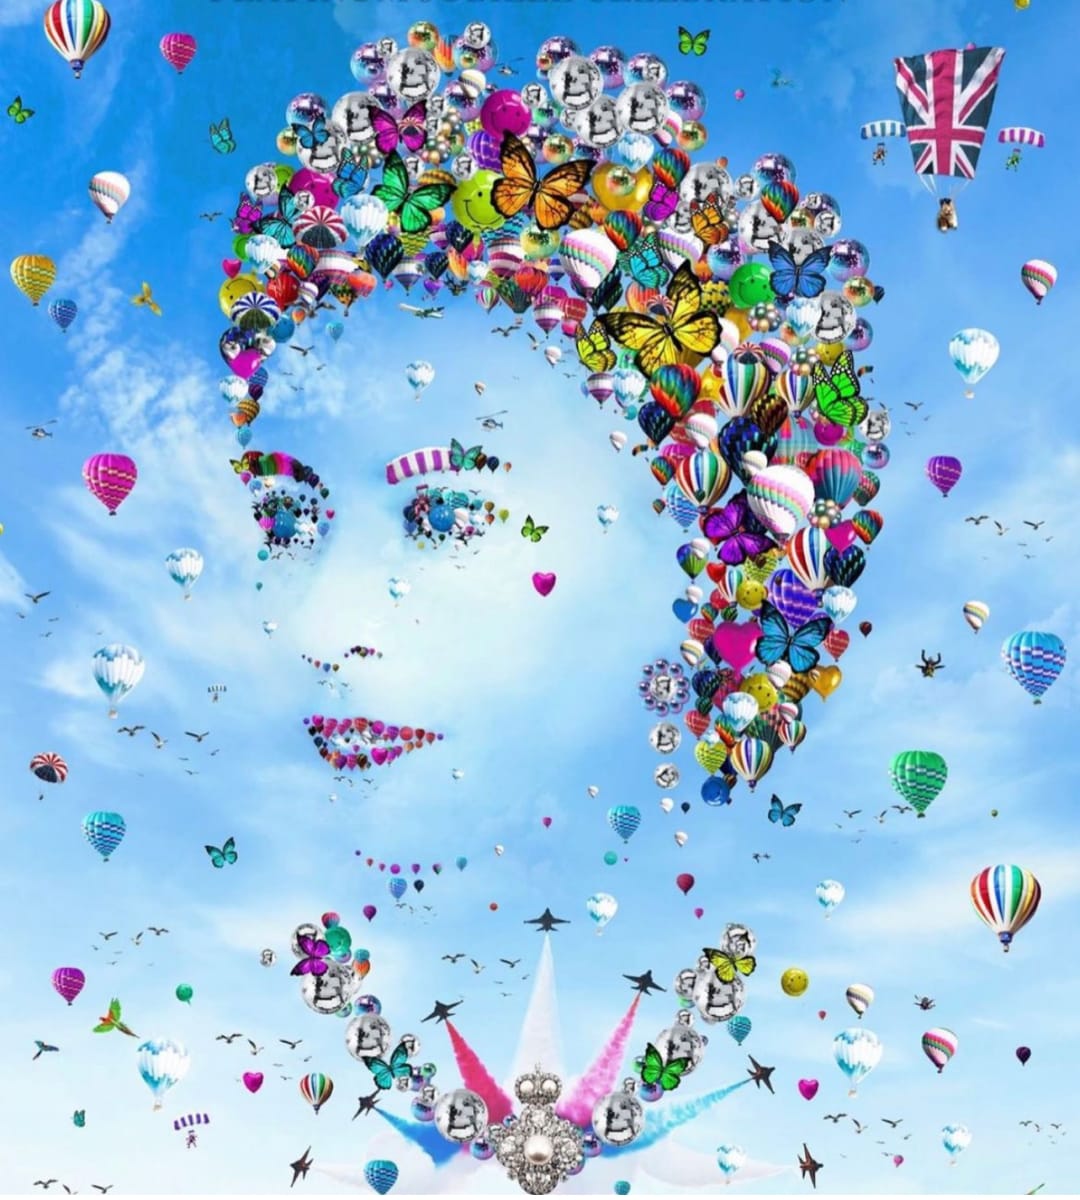 Iain Alexander by Iain Alexander  Image: Queen Elizabeth II Balloon Series